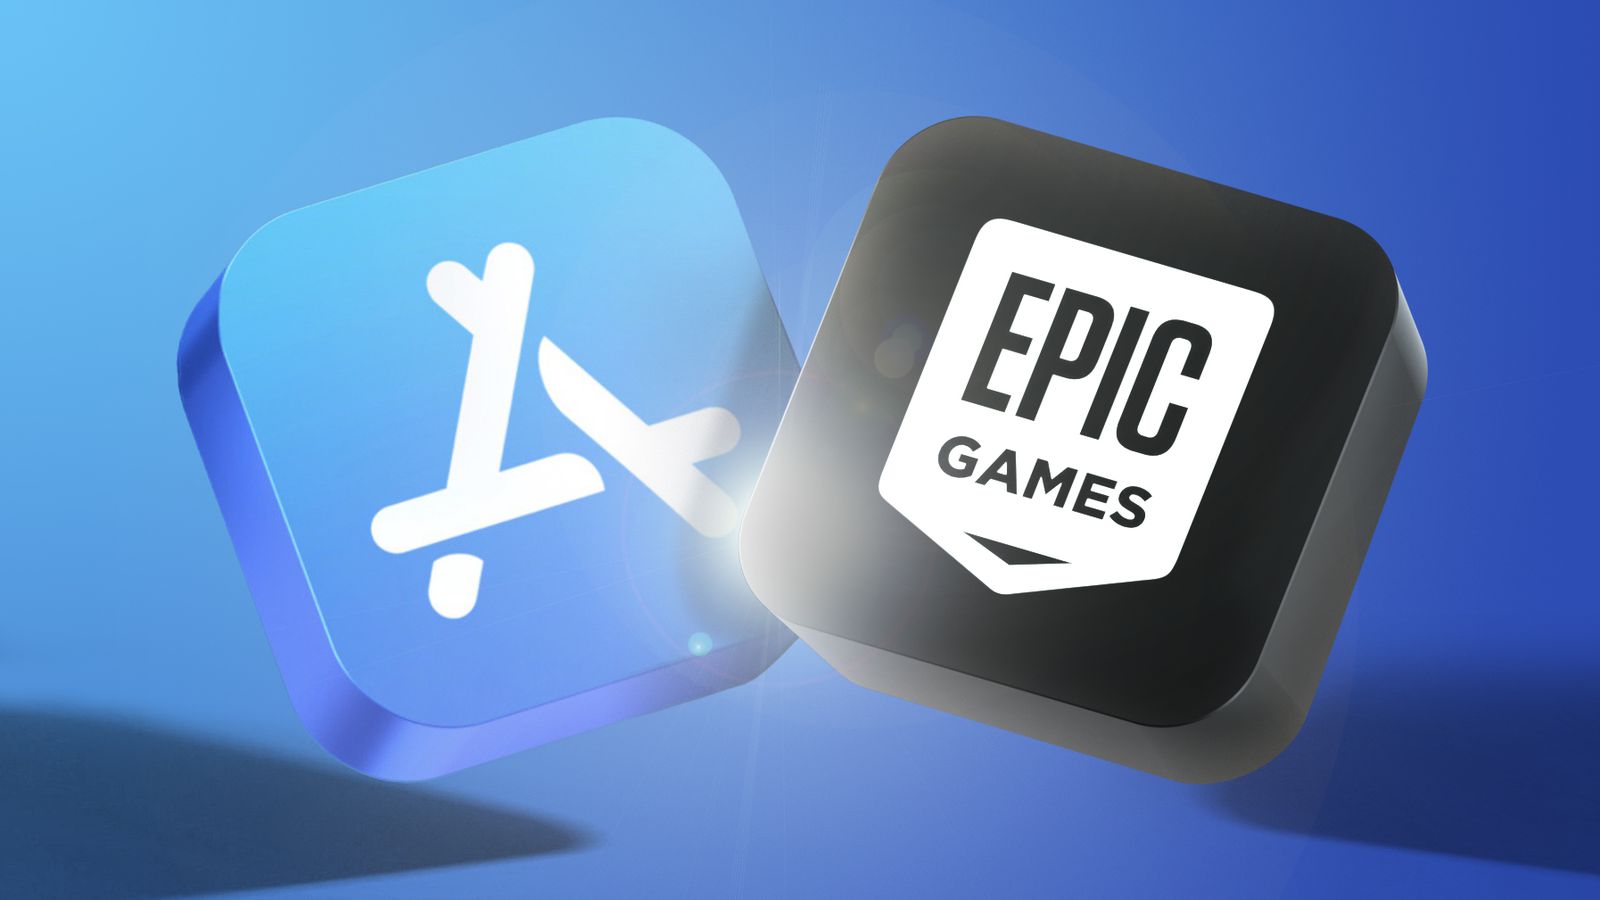 Epic Games Fails to Prove Antitrust Claims Against Apple, Court Rules